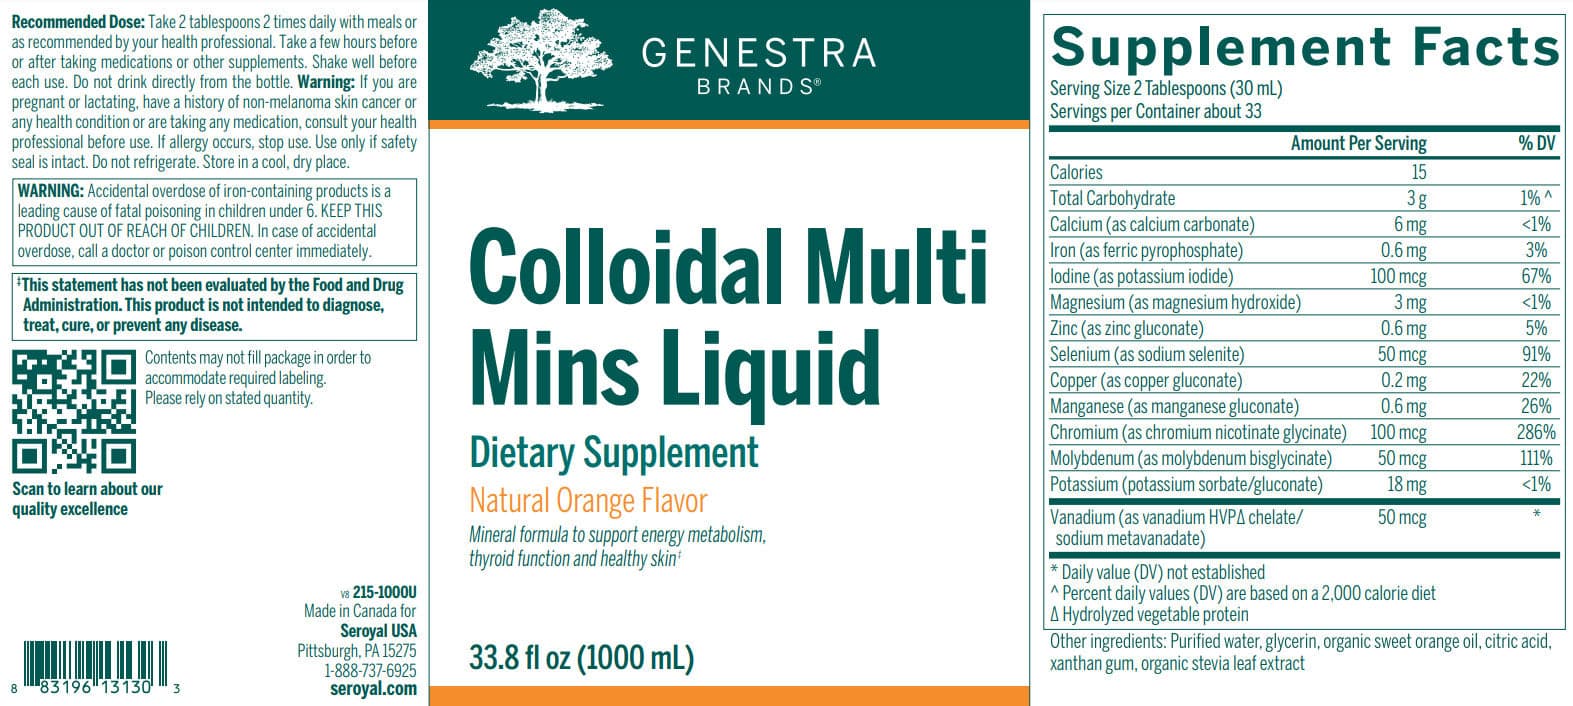 Genestra Brands Colloidal Multi Mins Liquid Label